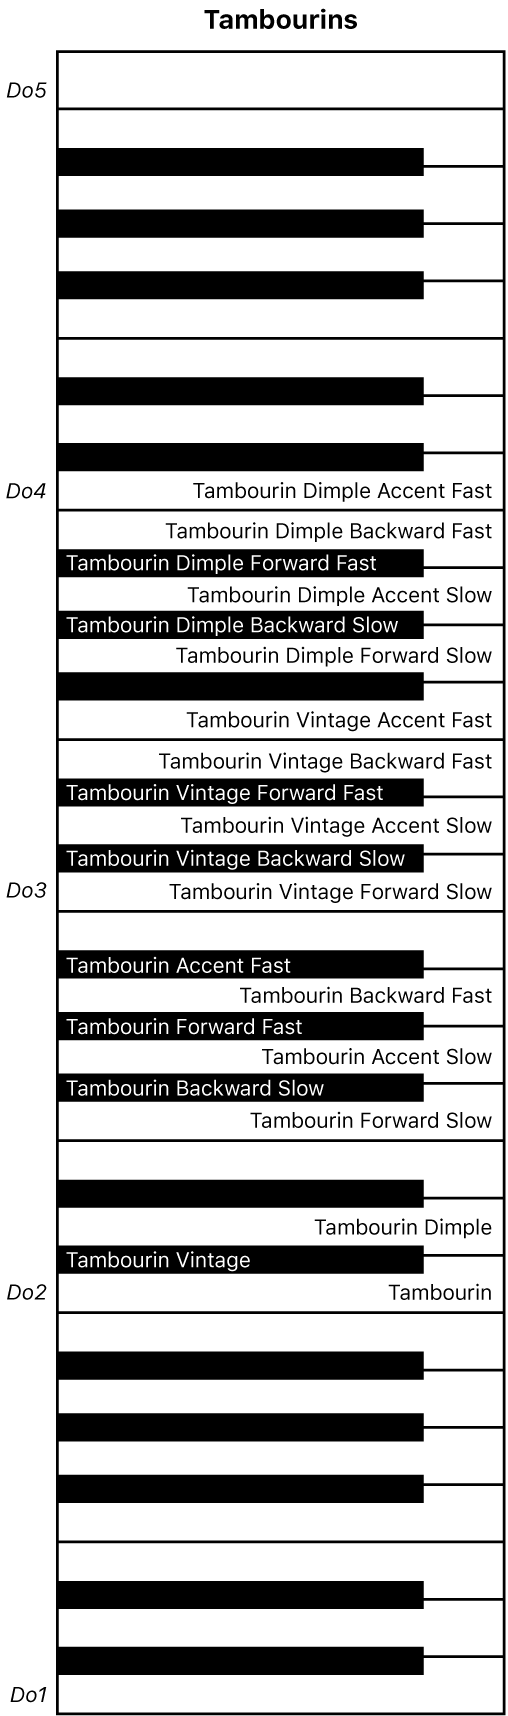 Figure Plan du clavier de performance Tambourins.